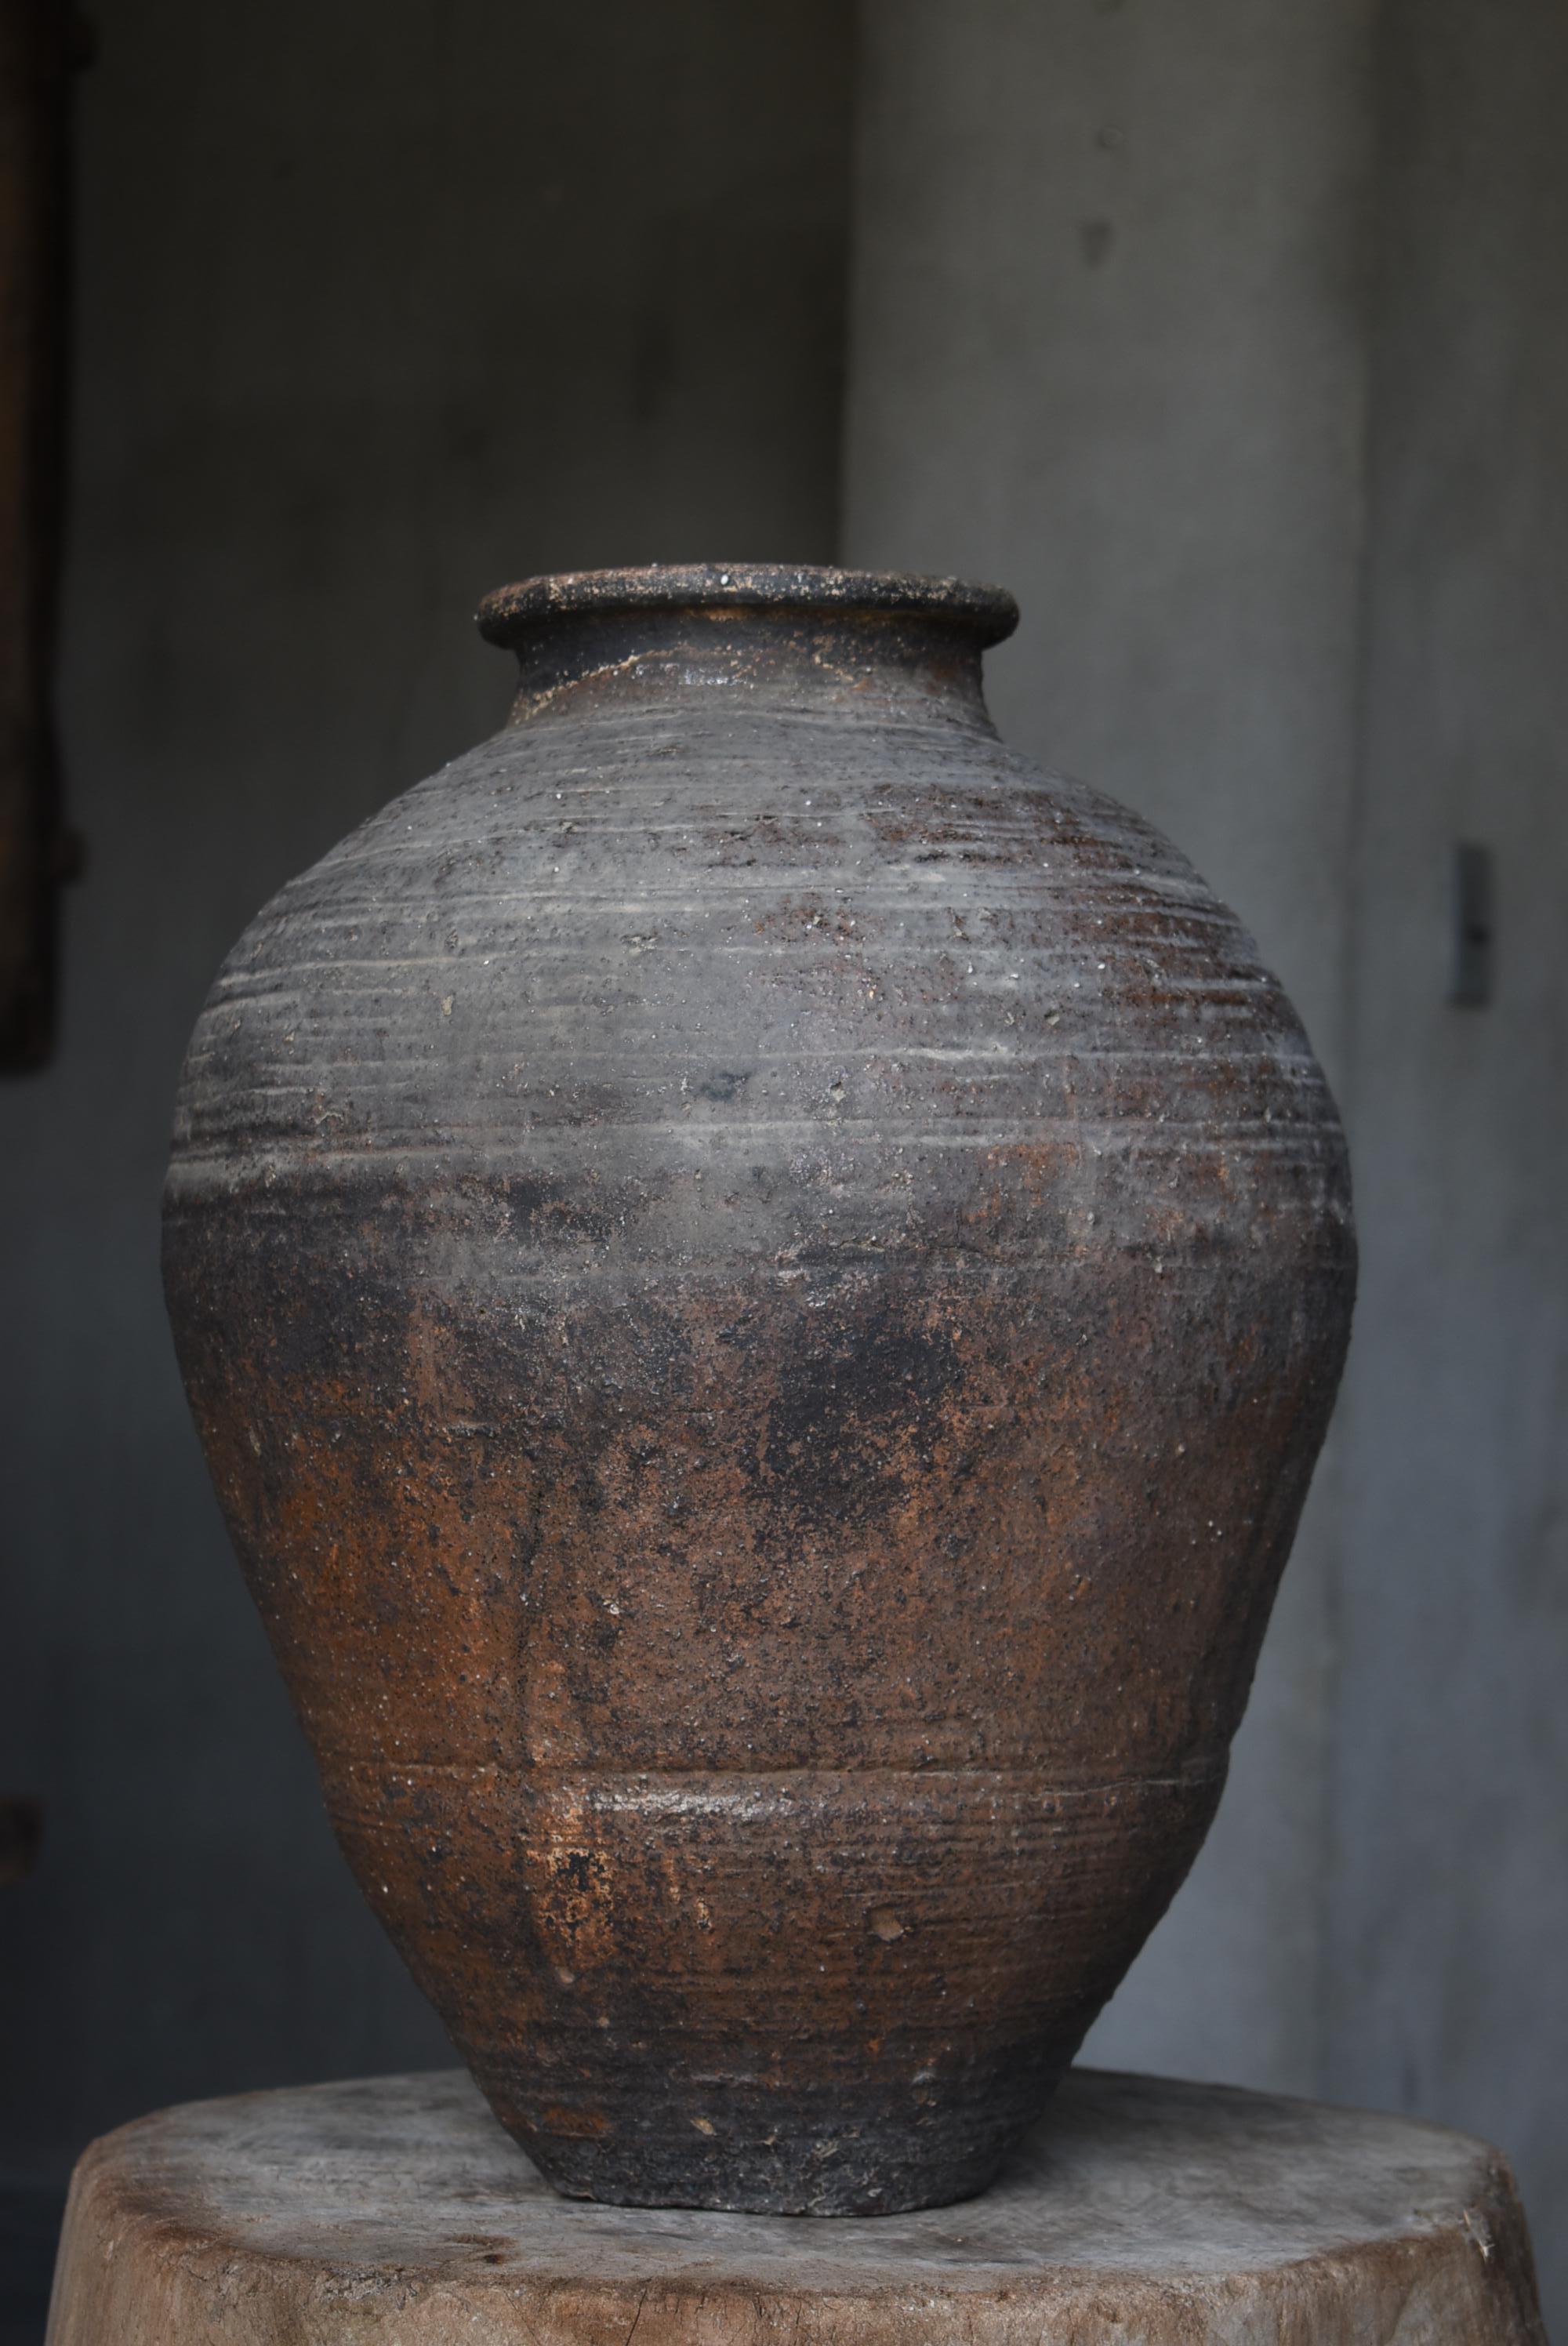 19th Century Japanese Old Pottery Edo Period 1800s-1900s/Antique Vessel Ceramic Flower Vase